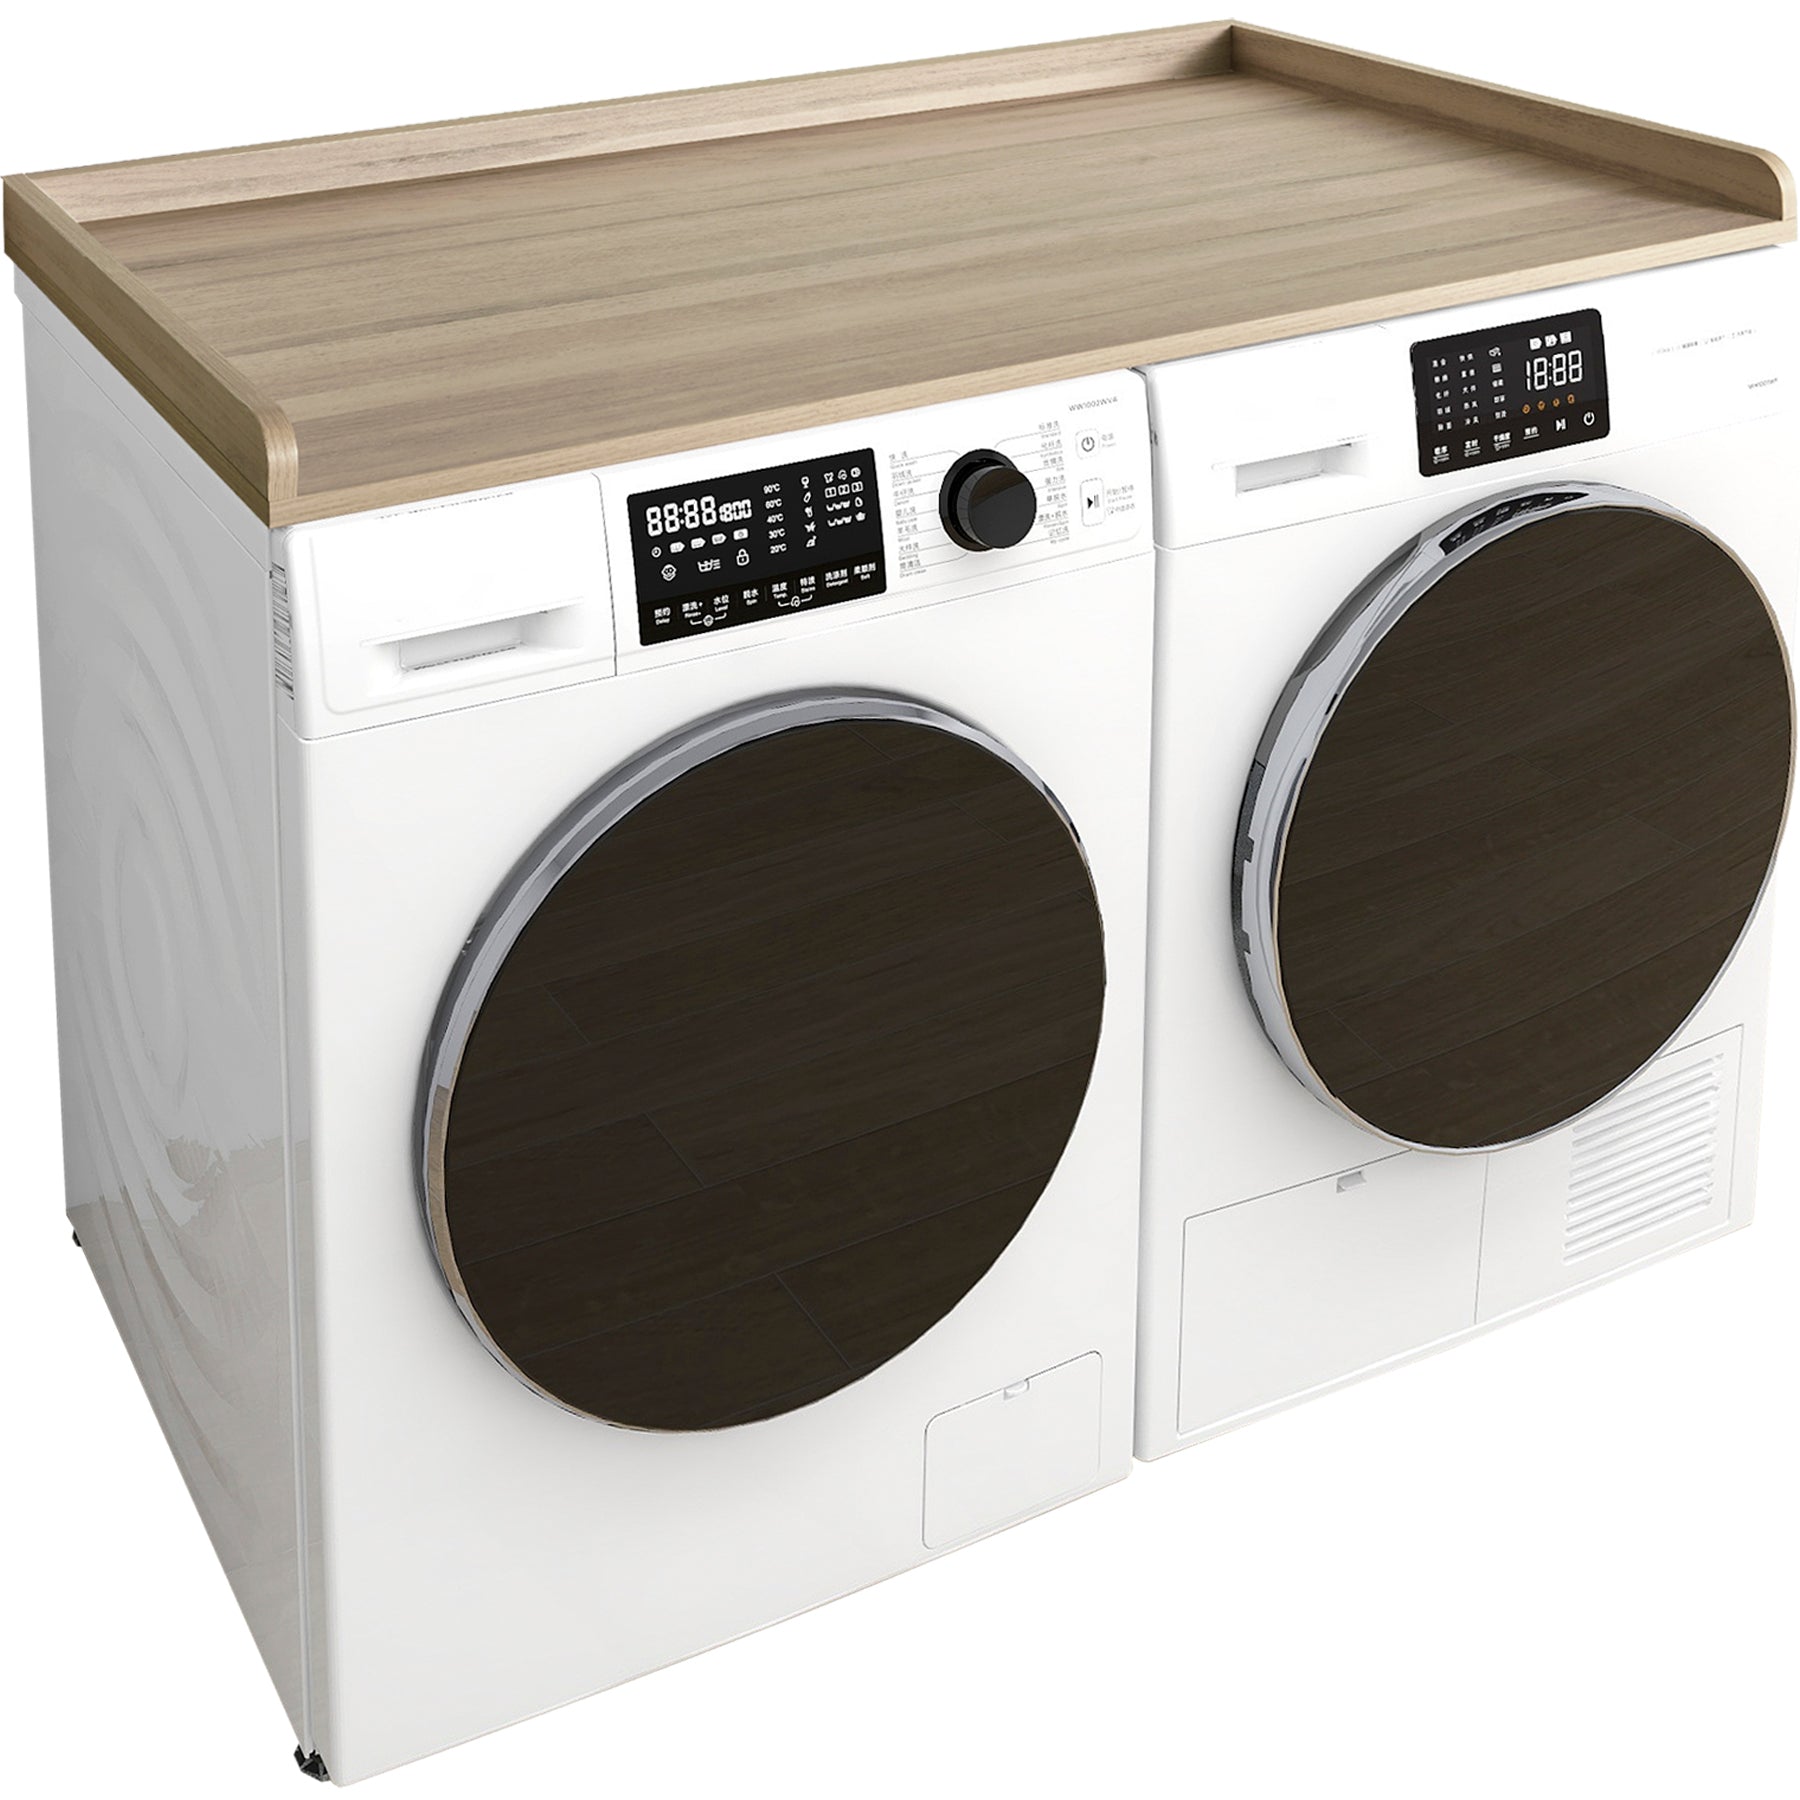 Kaboon Washer Dryer Countertop, Oak